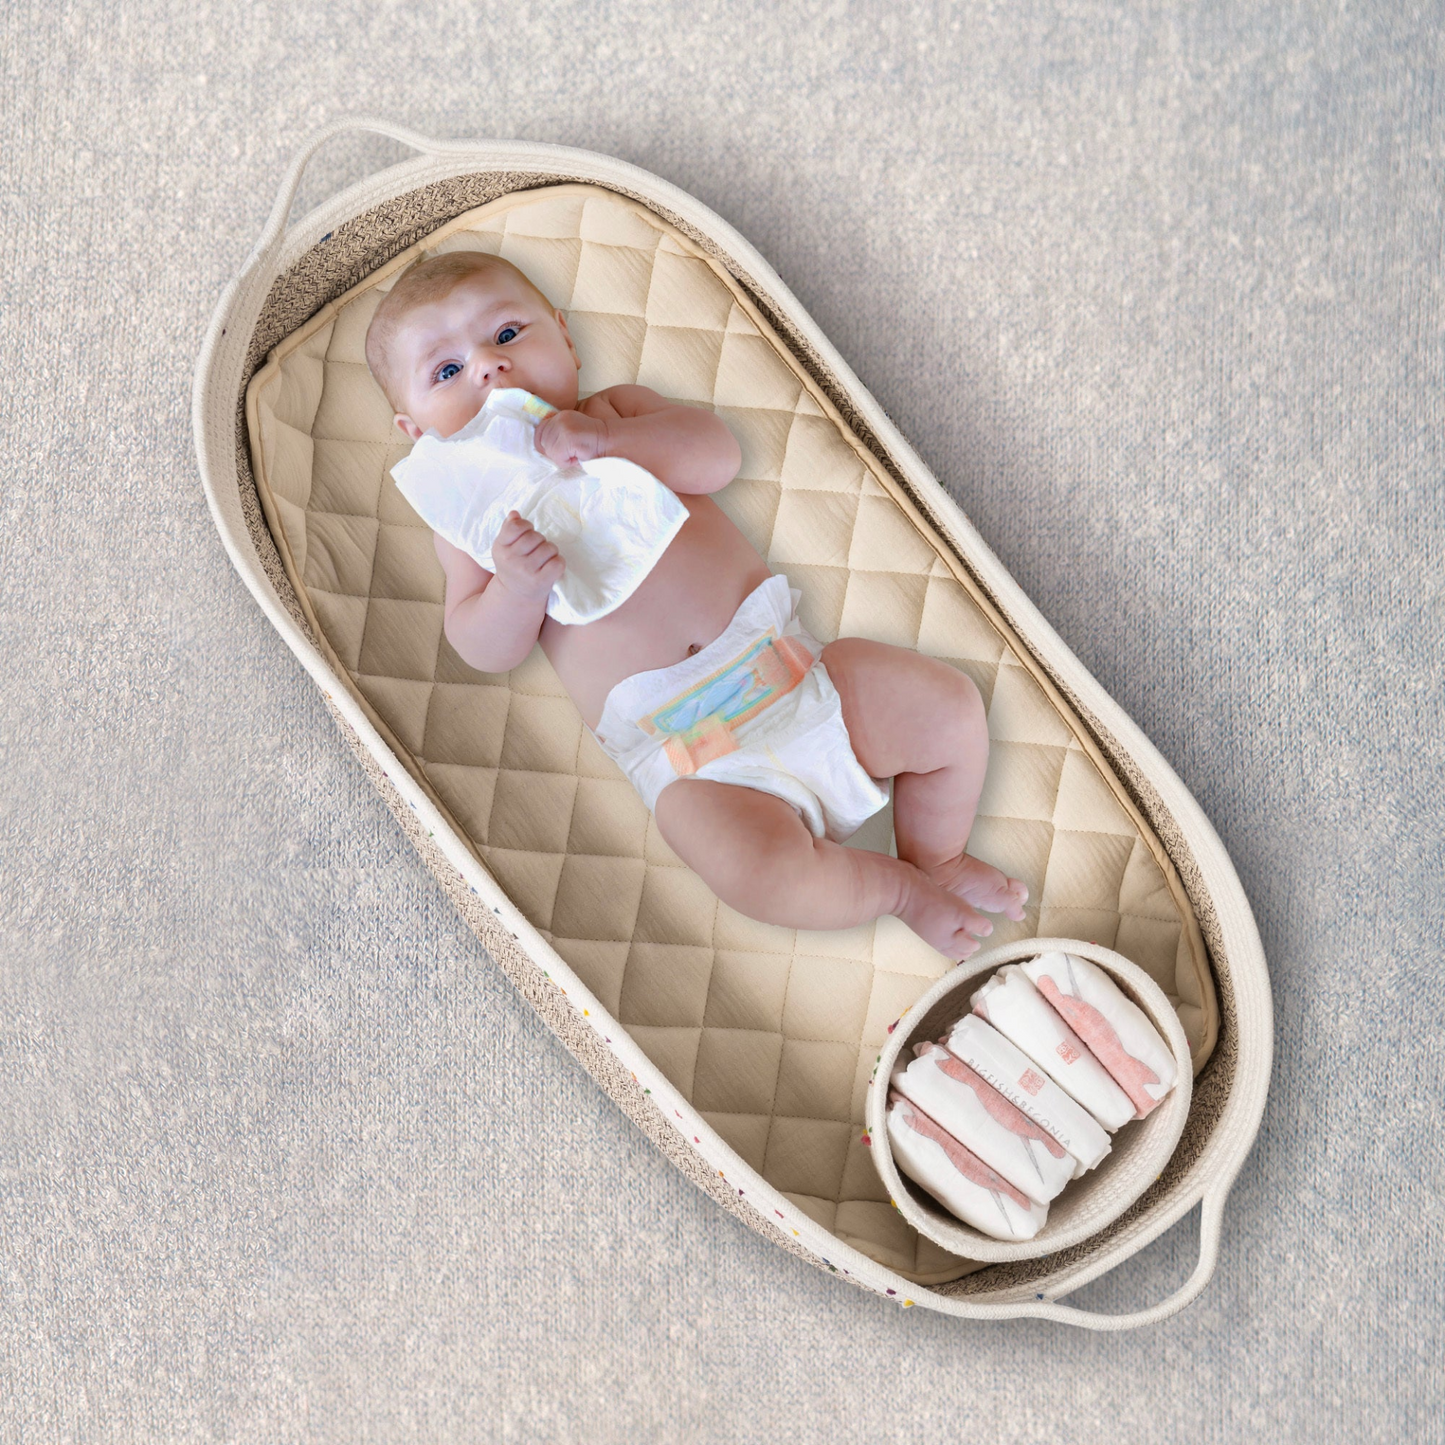 Baby Diaper Changing Basket - Handmade & 100% Cotton